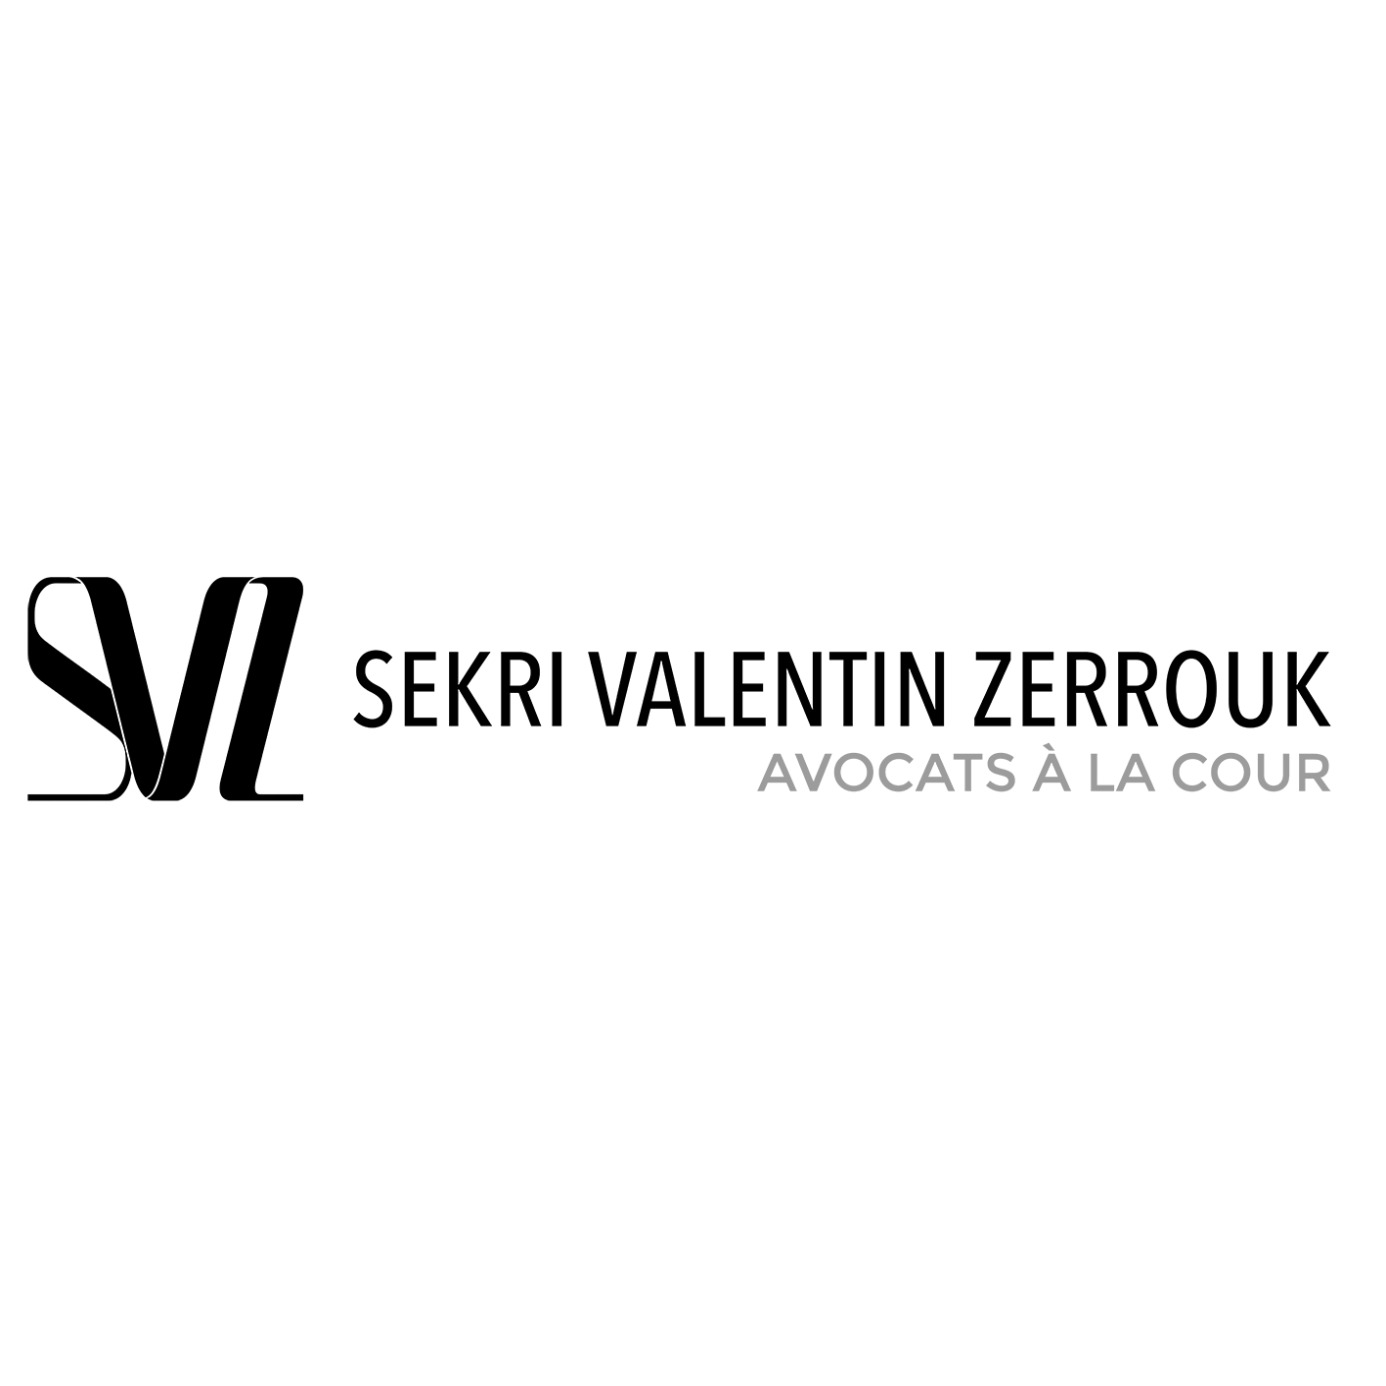 Sekri Valentin Zerrouk - SVZ